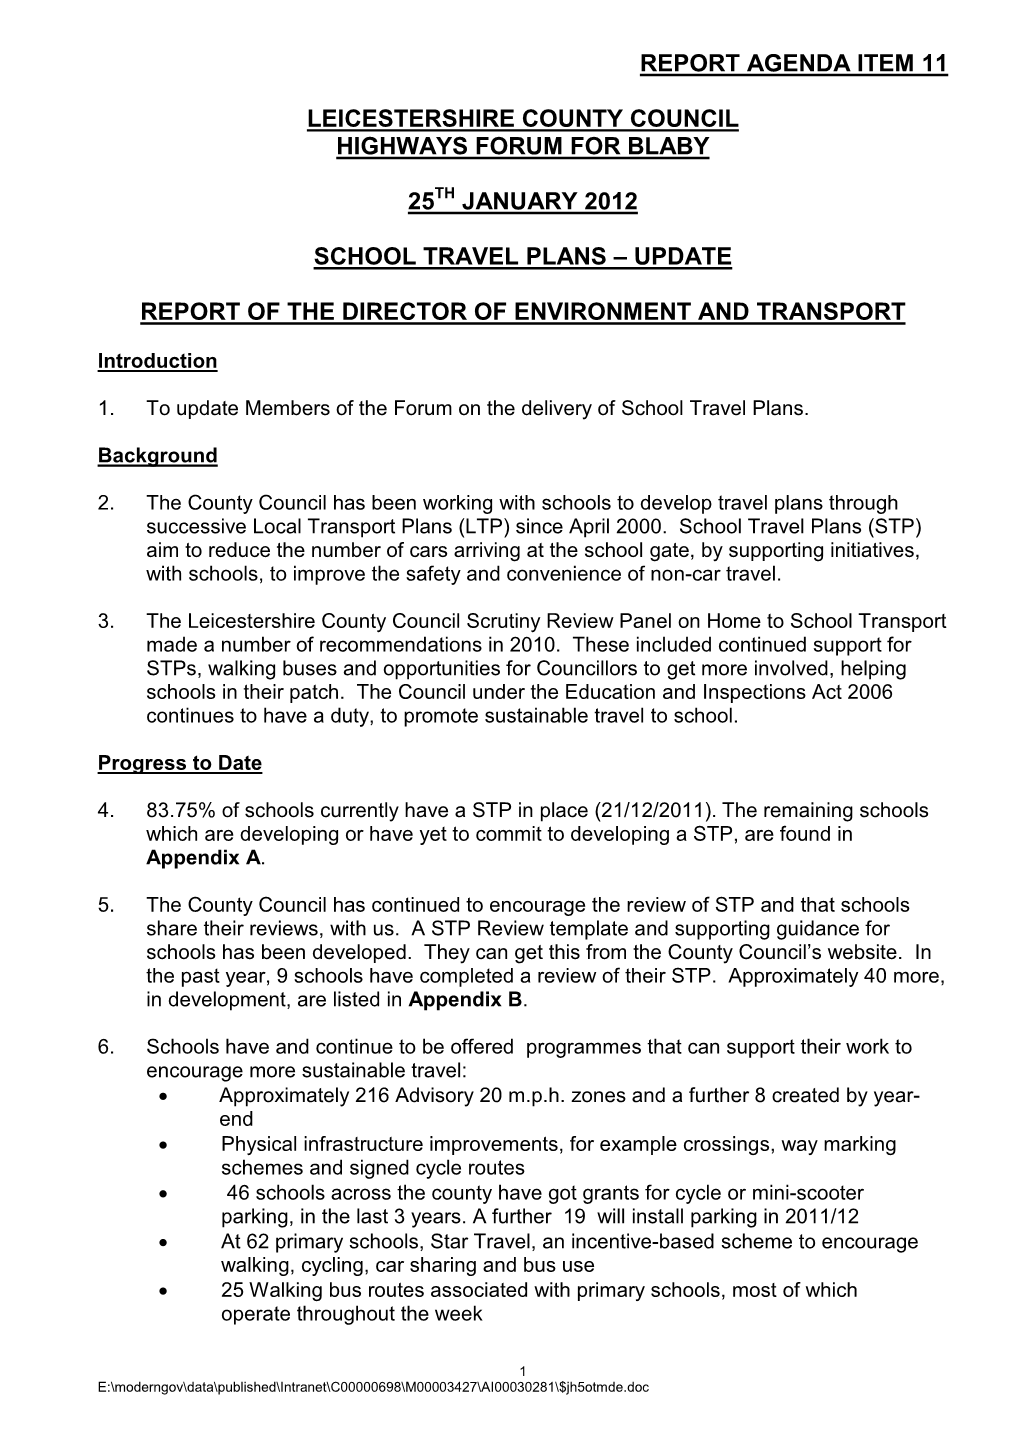 January 2012 School Travel Plans